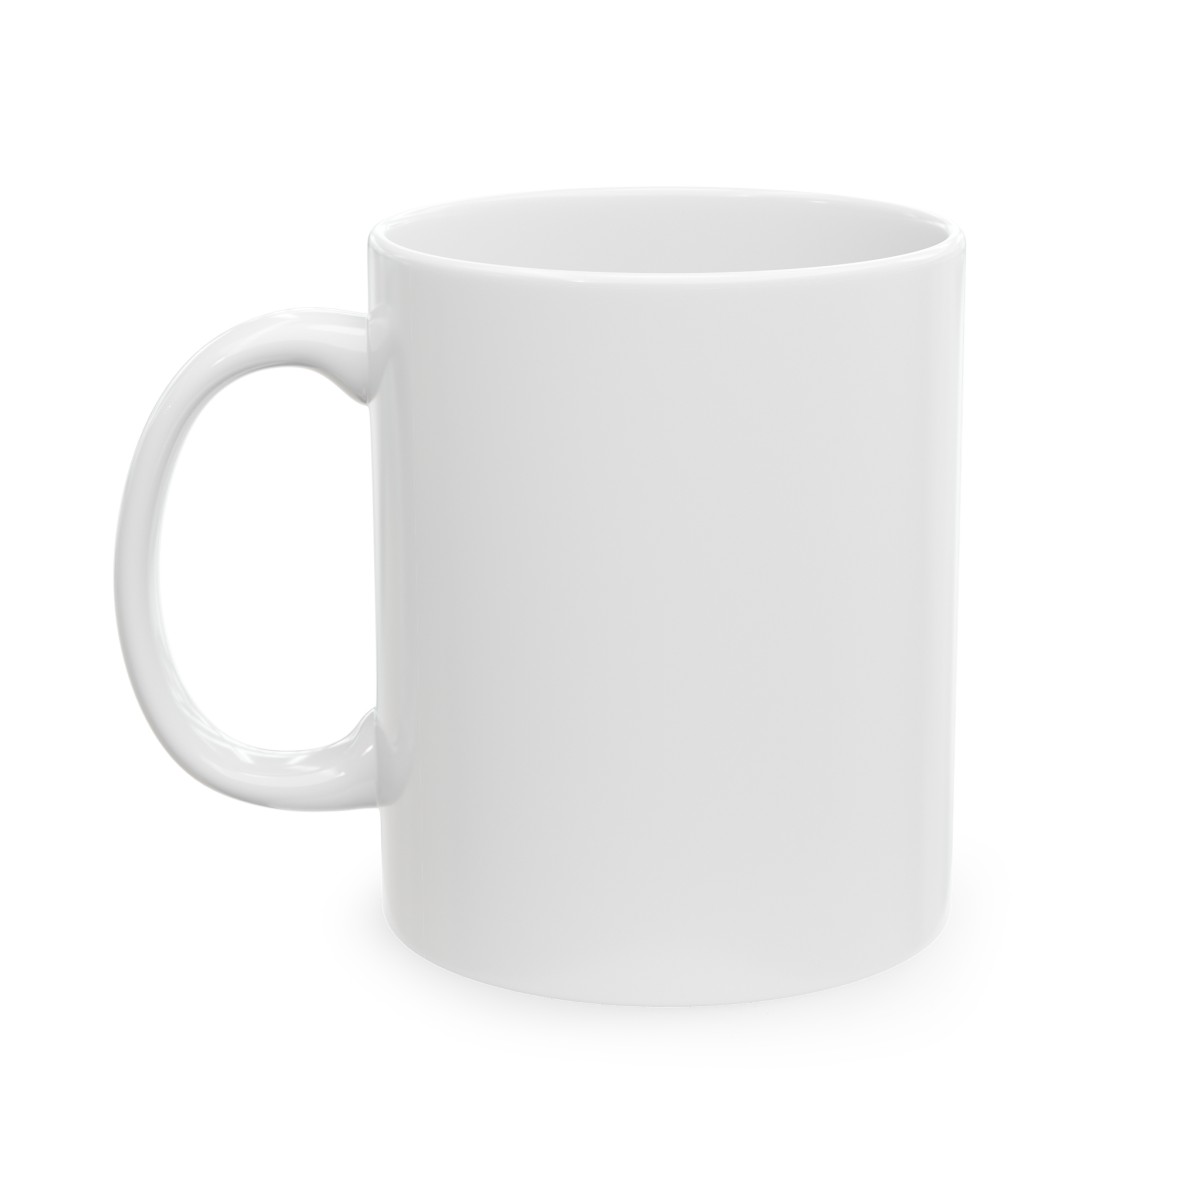 I'm Rooting for You White Ceramic Mug 11oz product thumbnail image